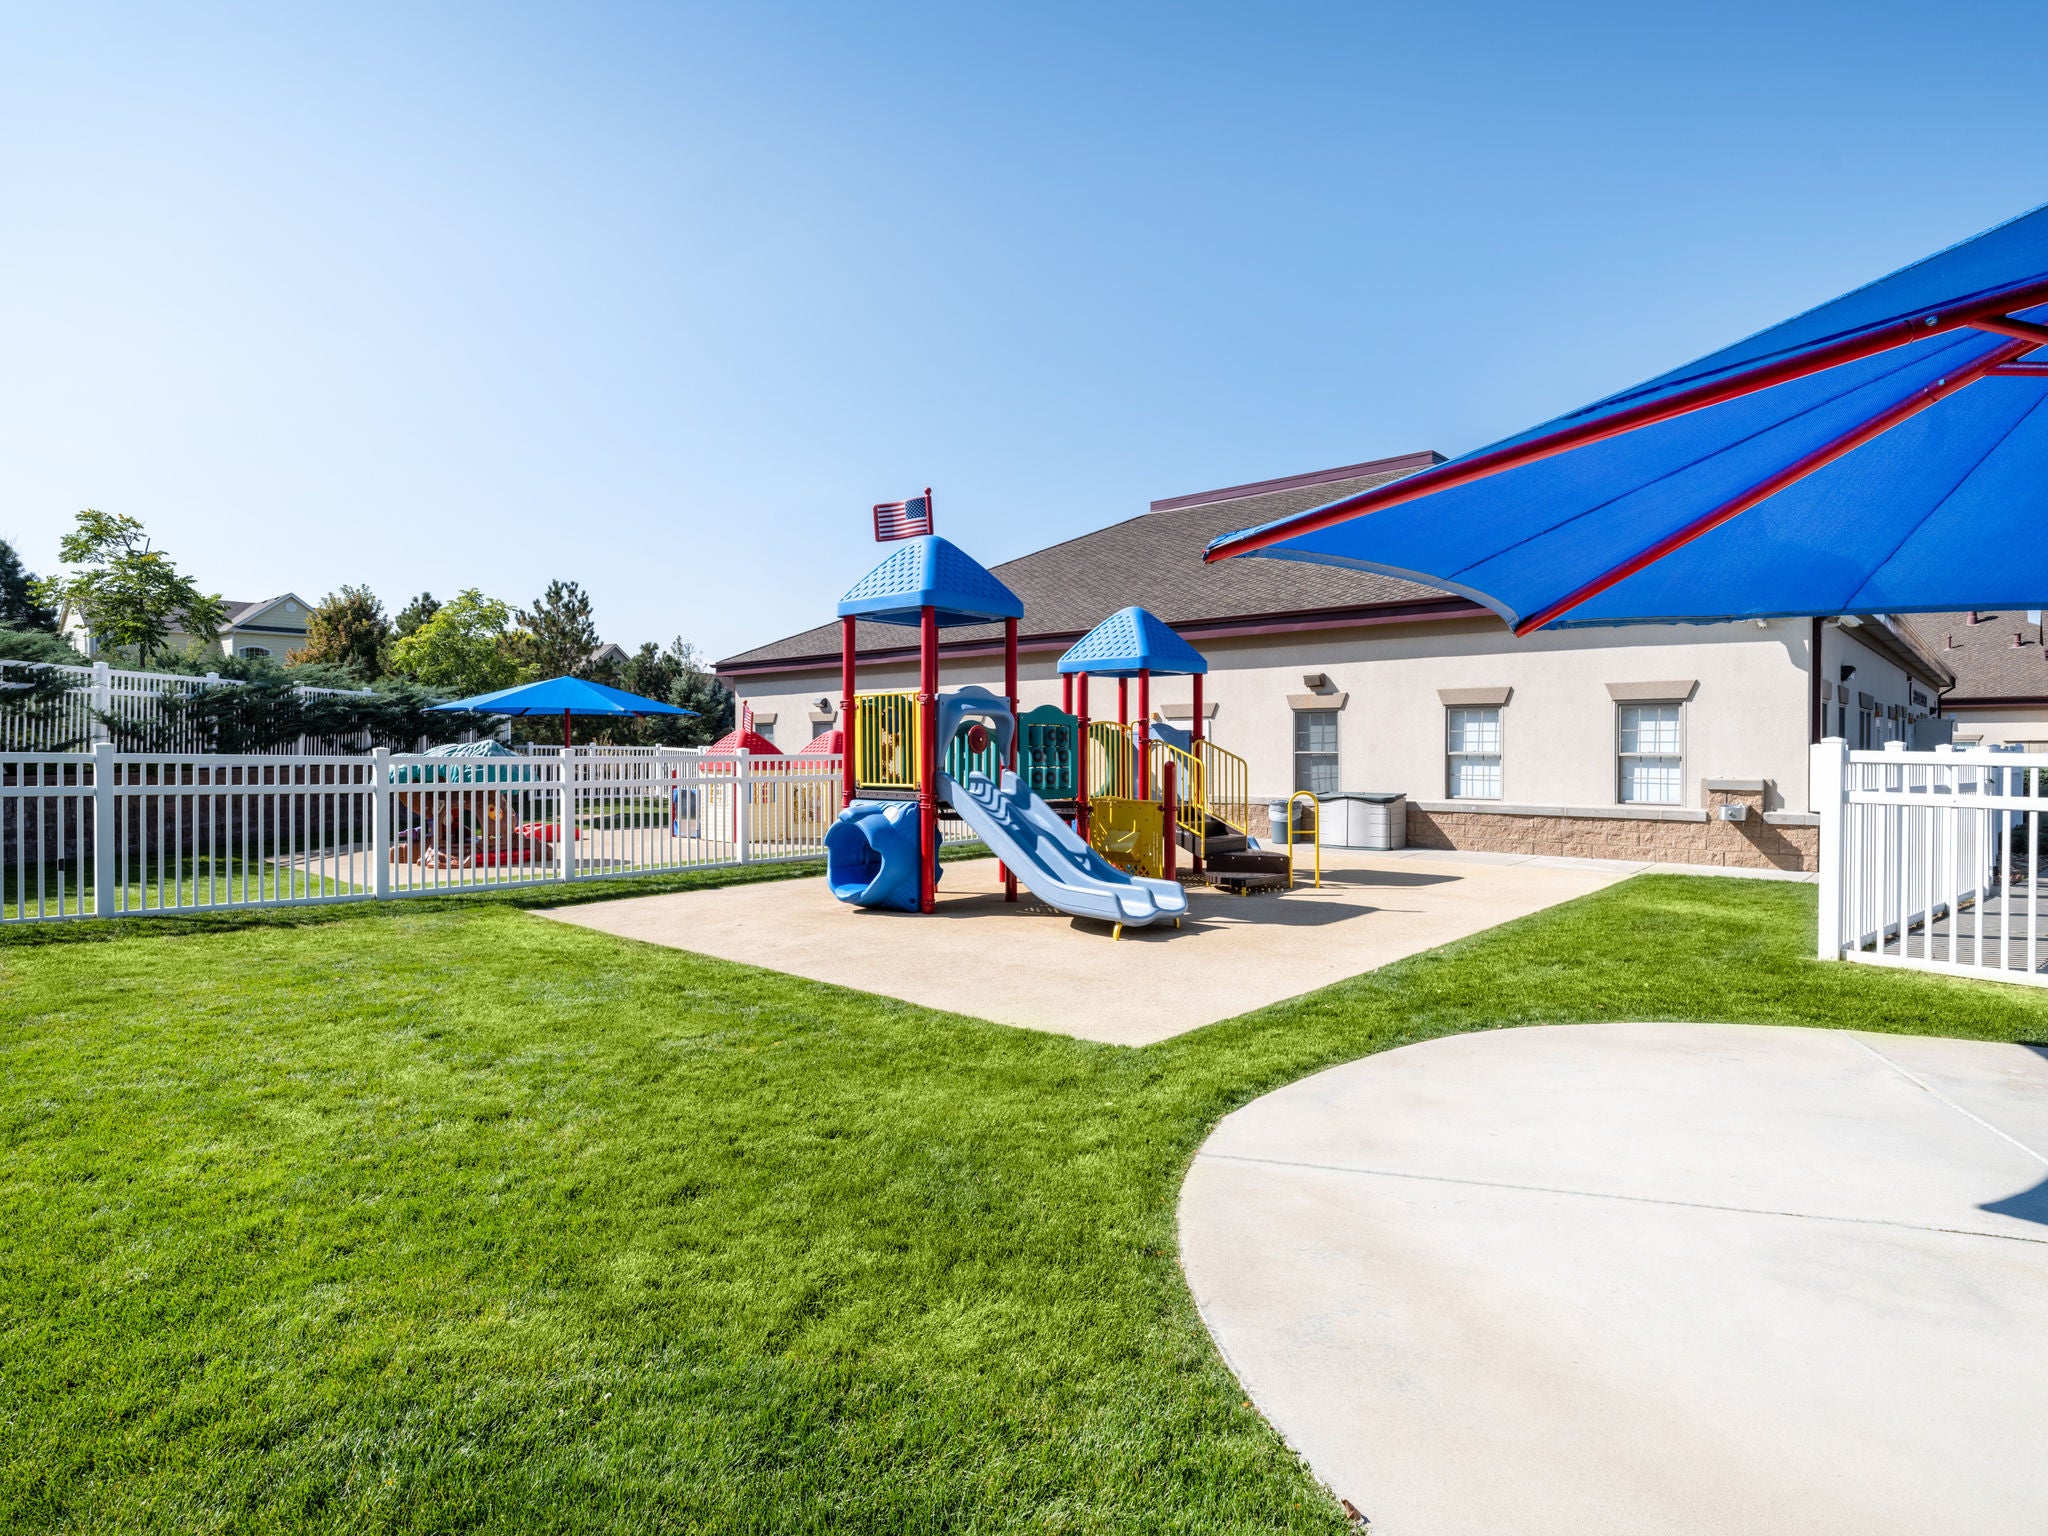 Playground of the Goddard School in Castle Rock Colorado